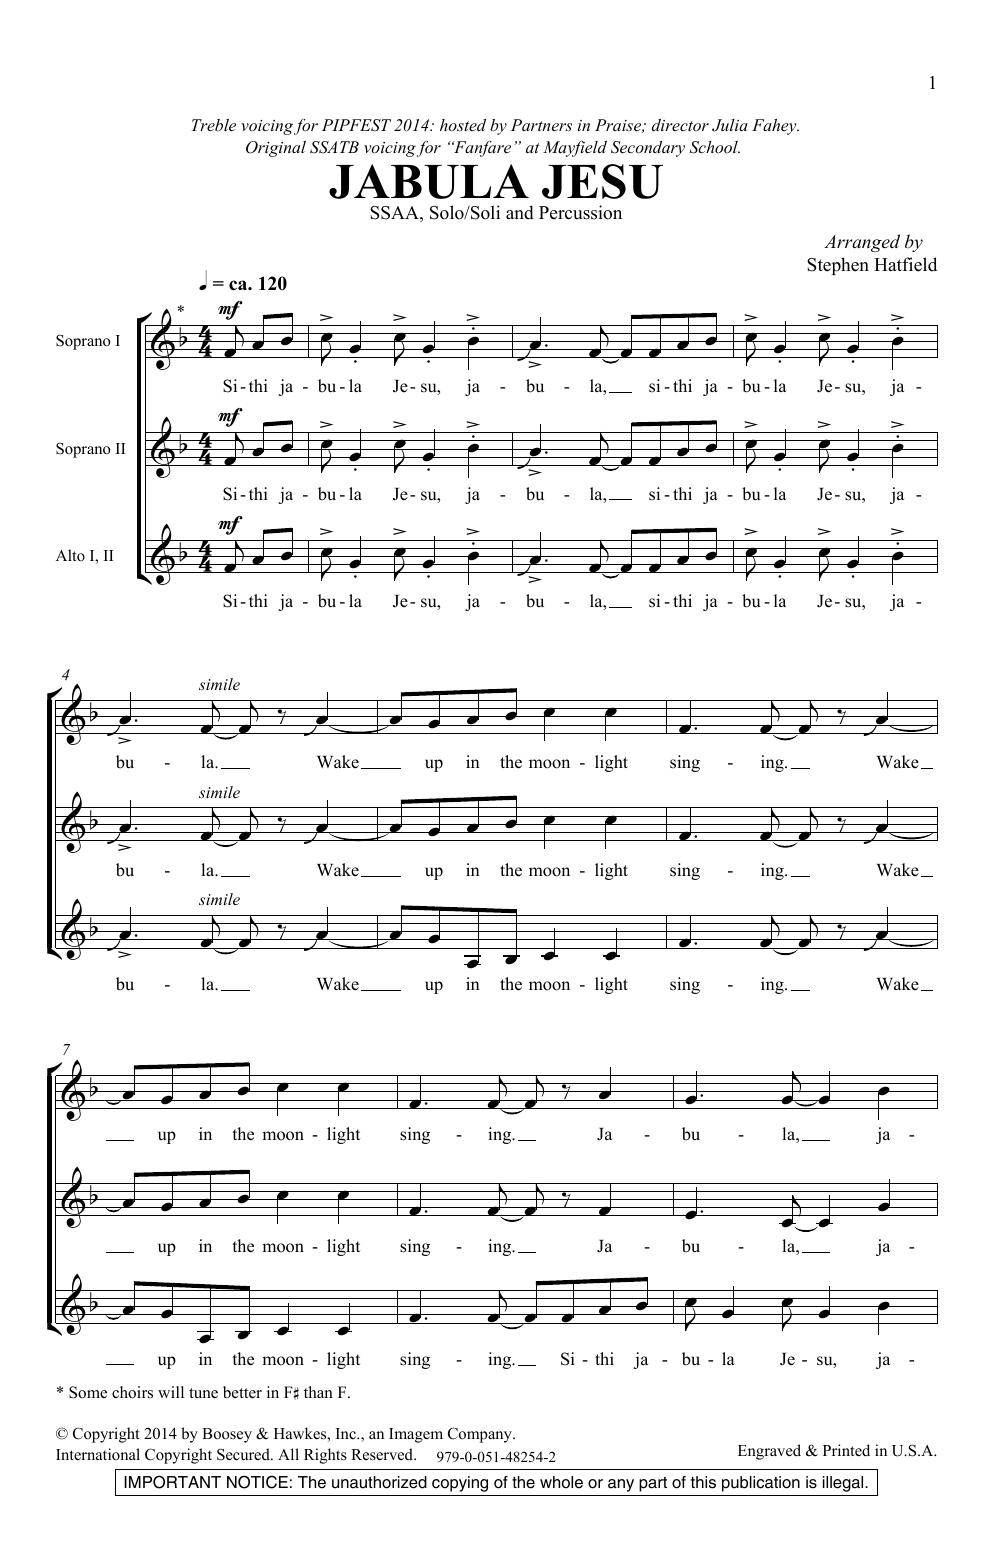 Download Stephen Hatfield Jabula Jesu Sheet Music and learn how to play SSA PDF digital score in minutes